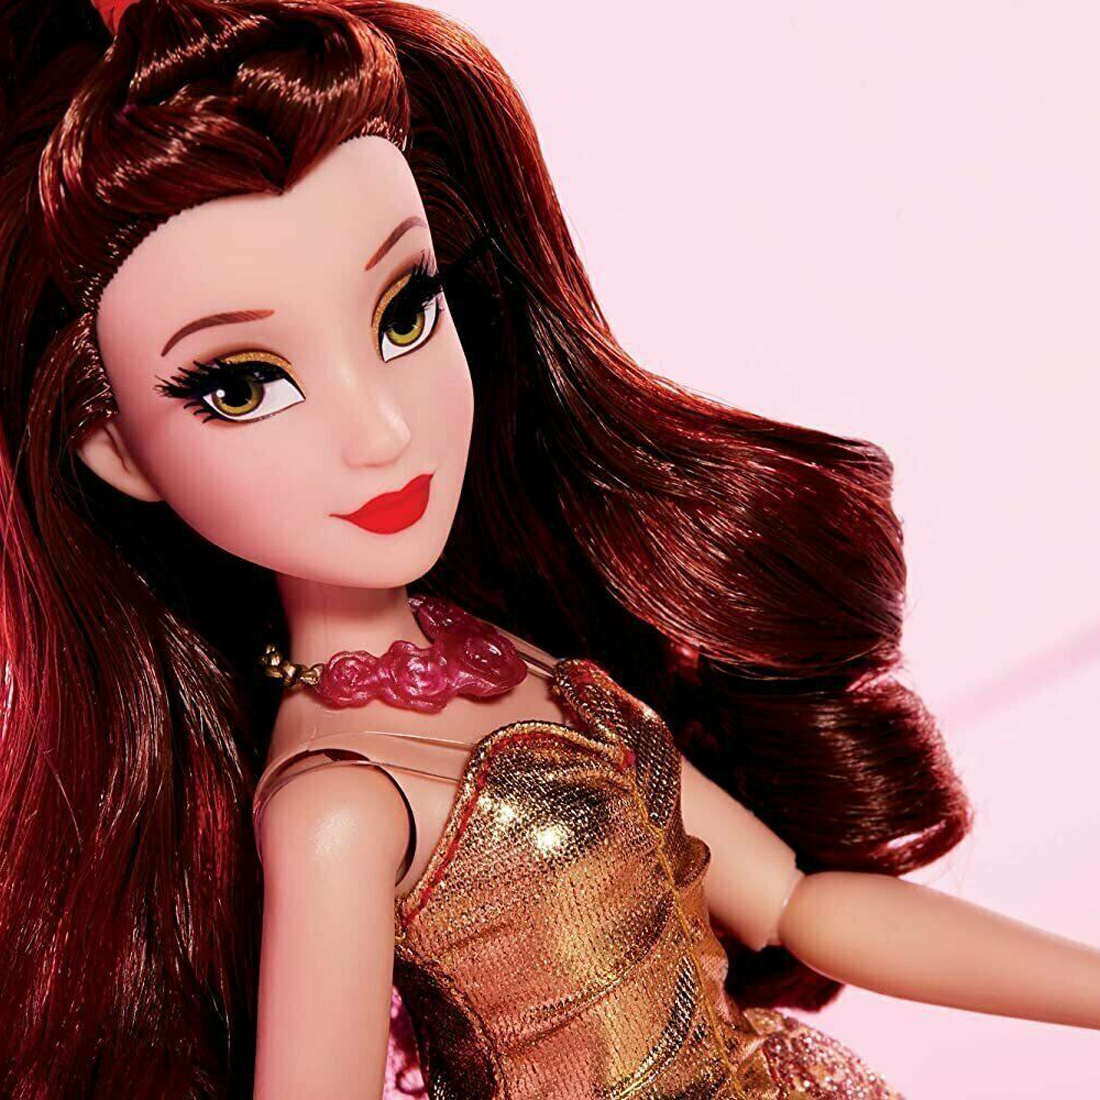 Disney Princess Style Series Belle Doll